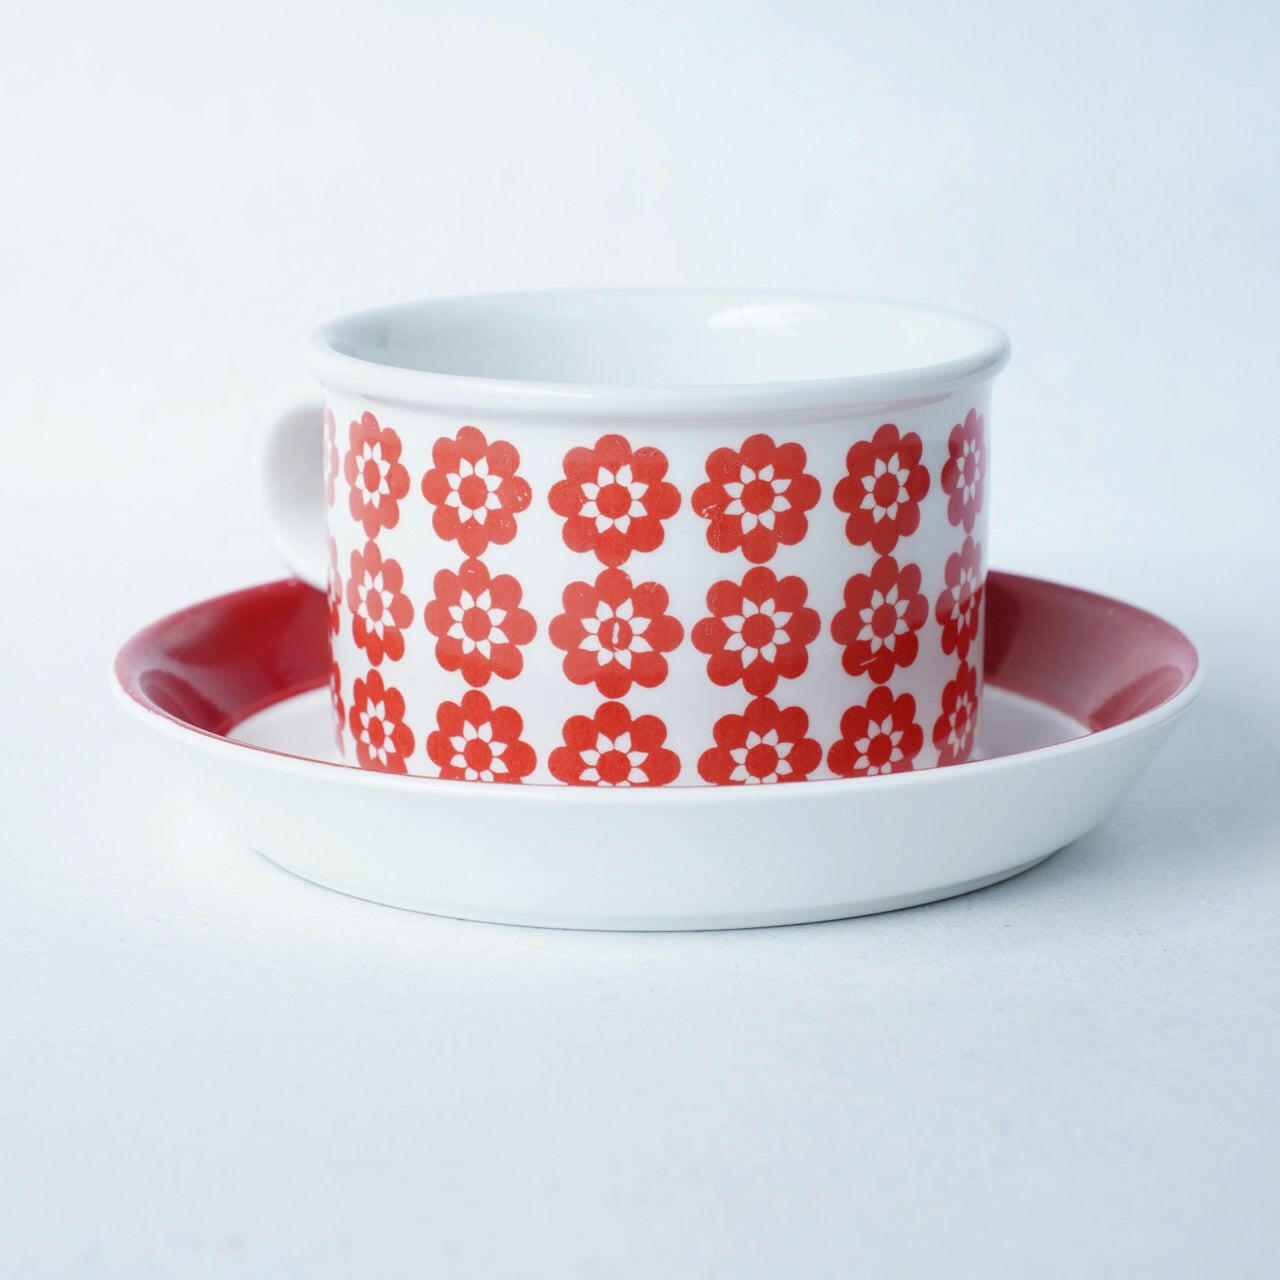 Gustavsberg Malva tea cup and saucer